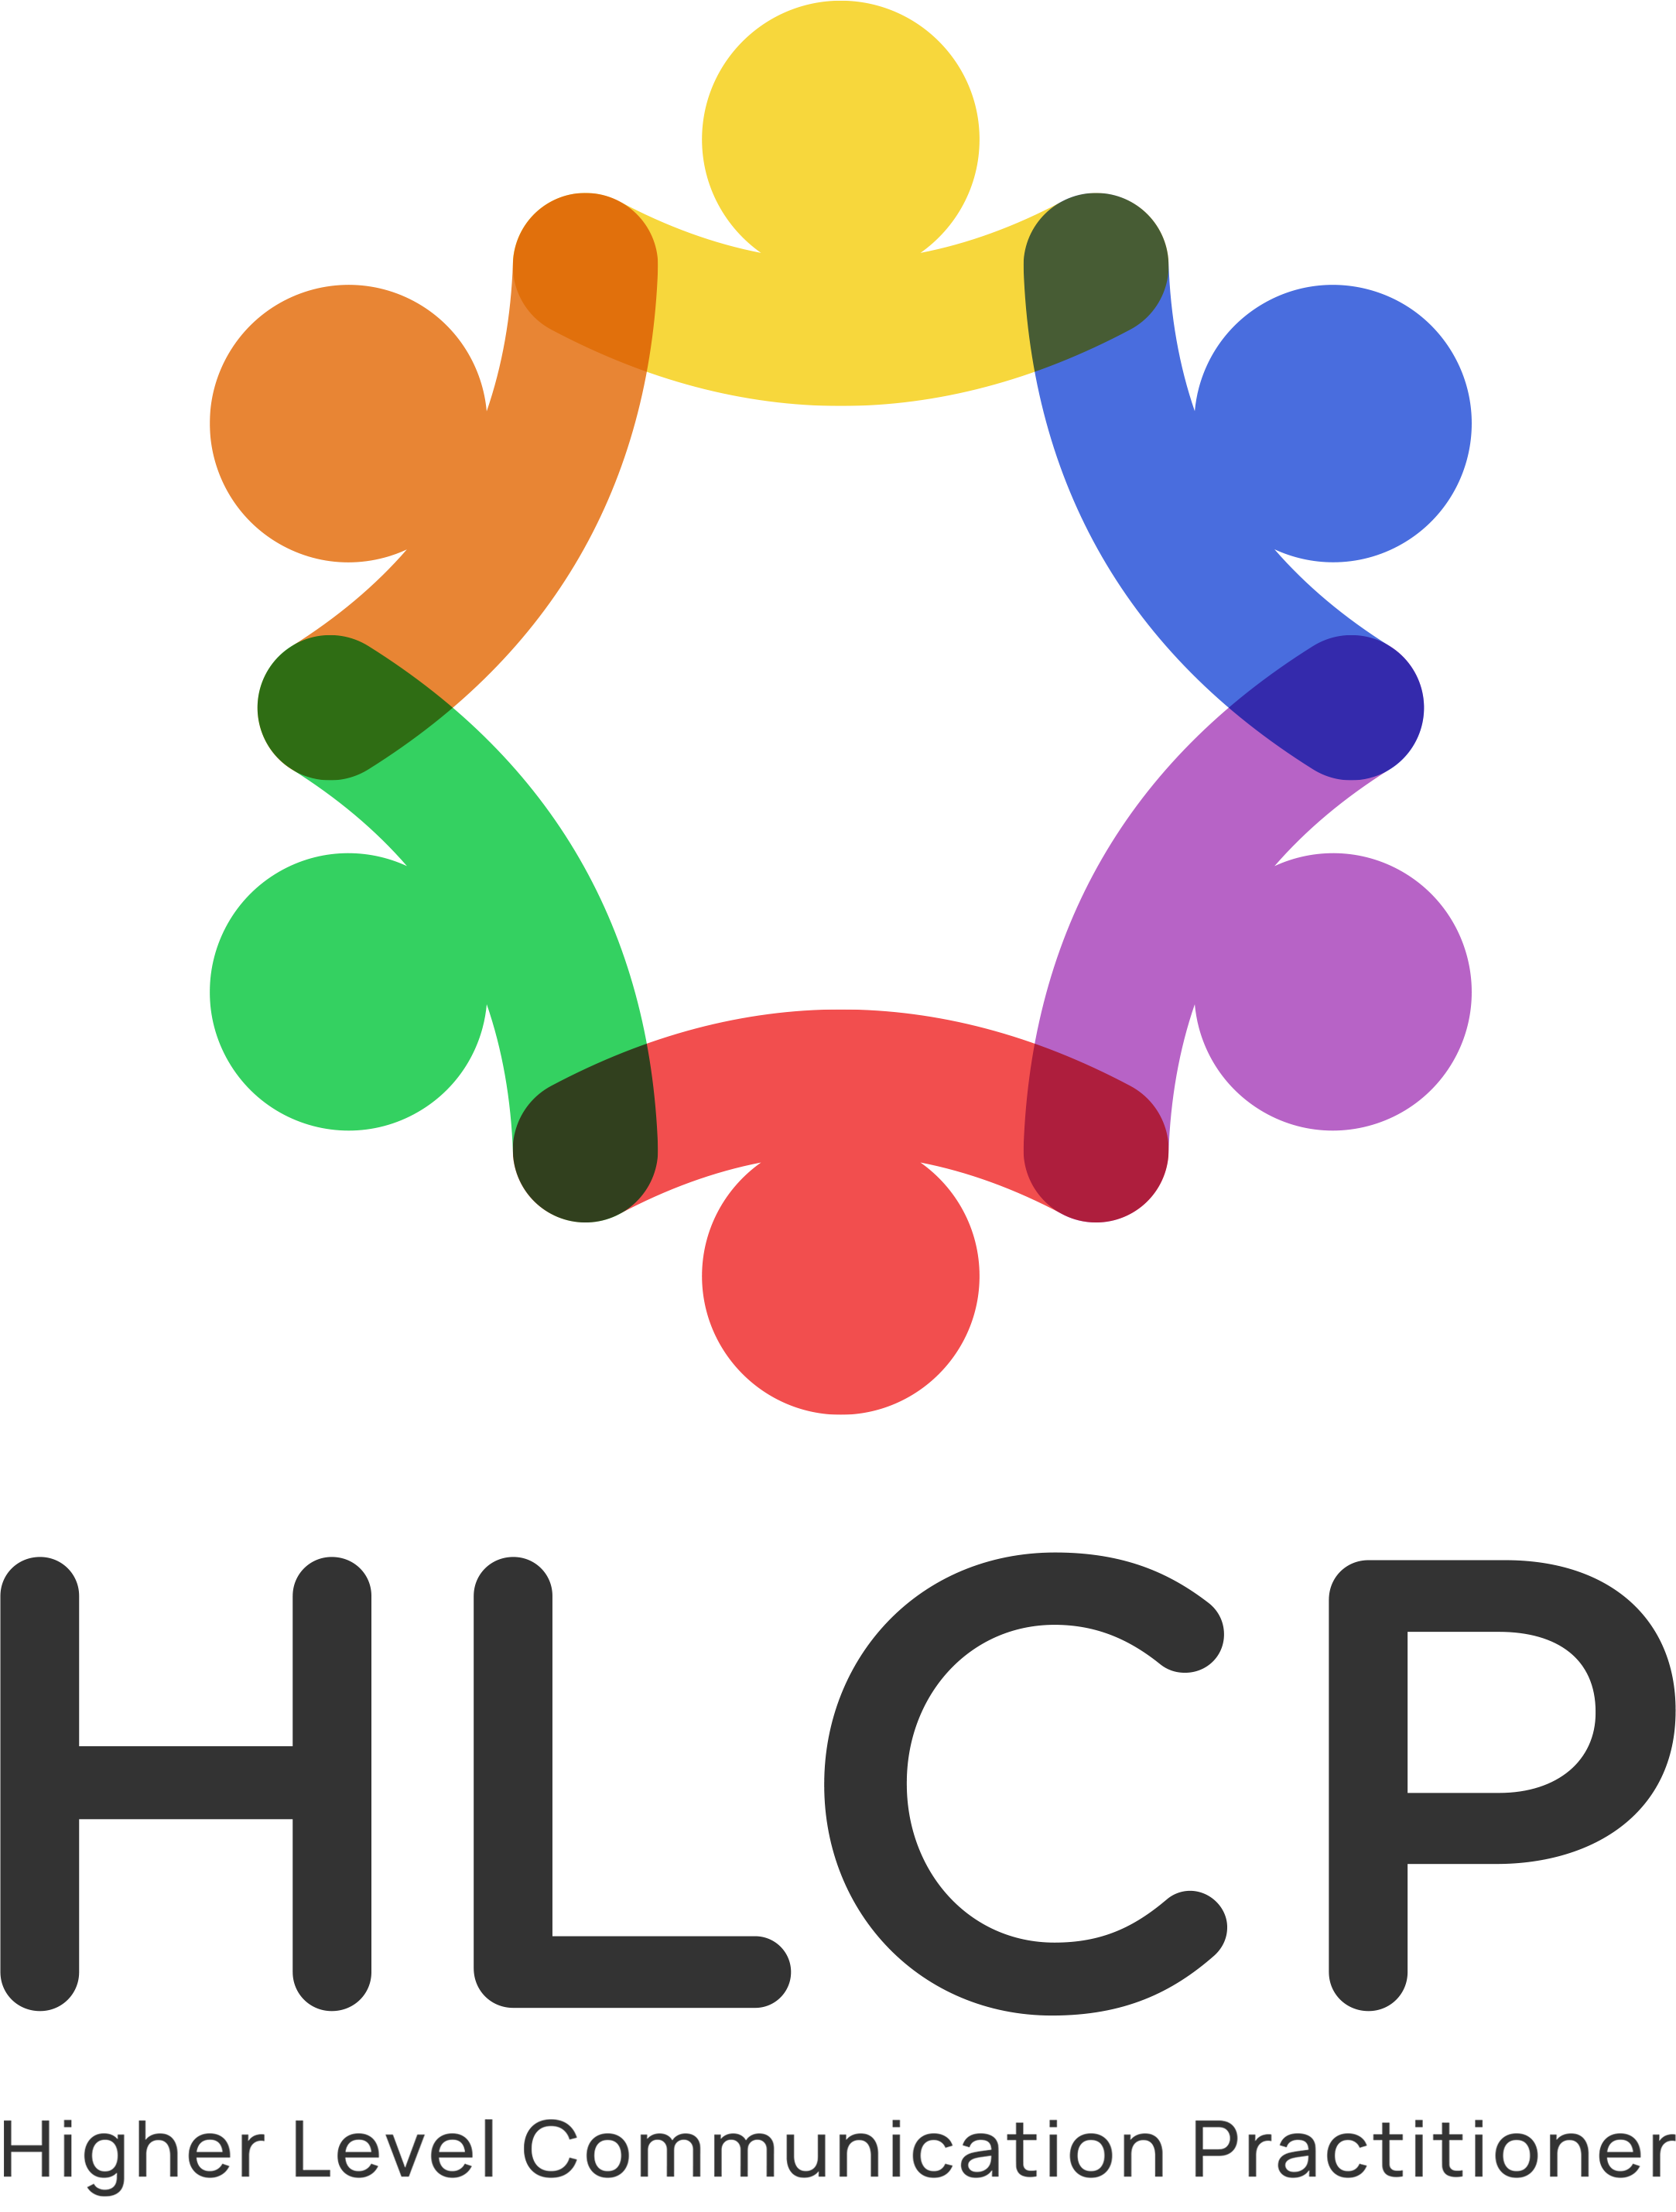 HLCP - Higher Level Communication Practitioner